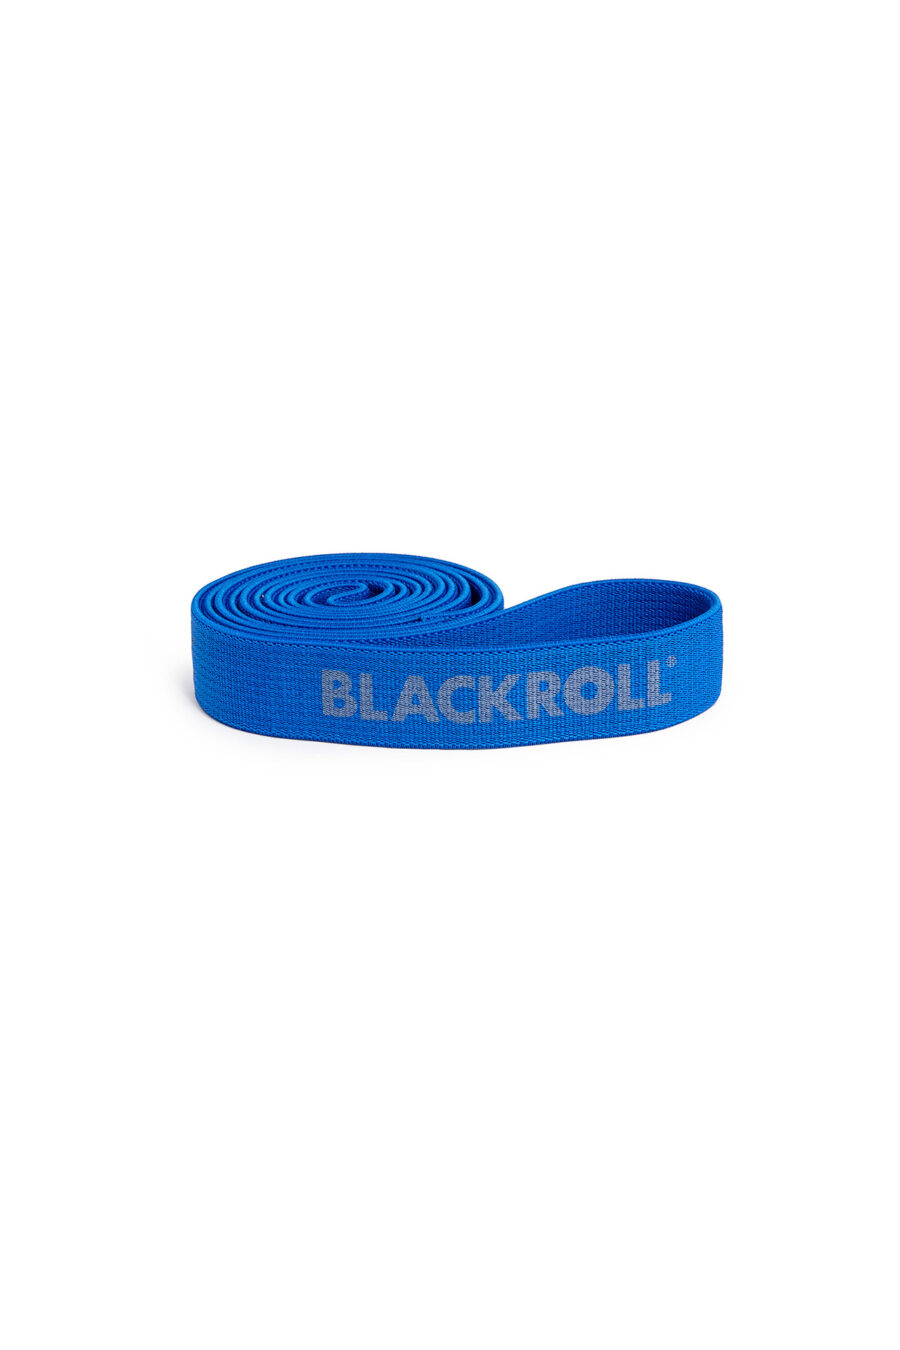 blackroll super band blue wien 1080 fengbao shop training kraft